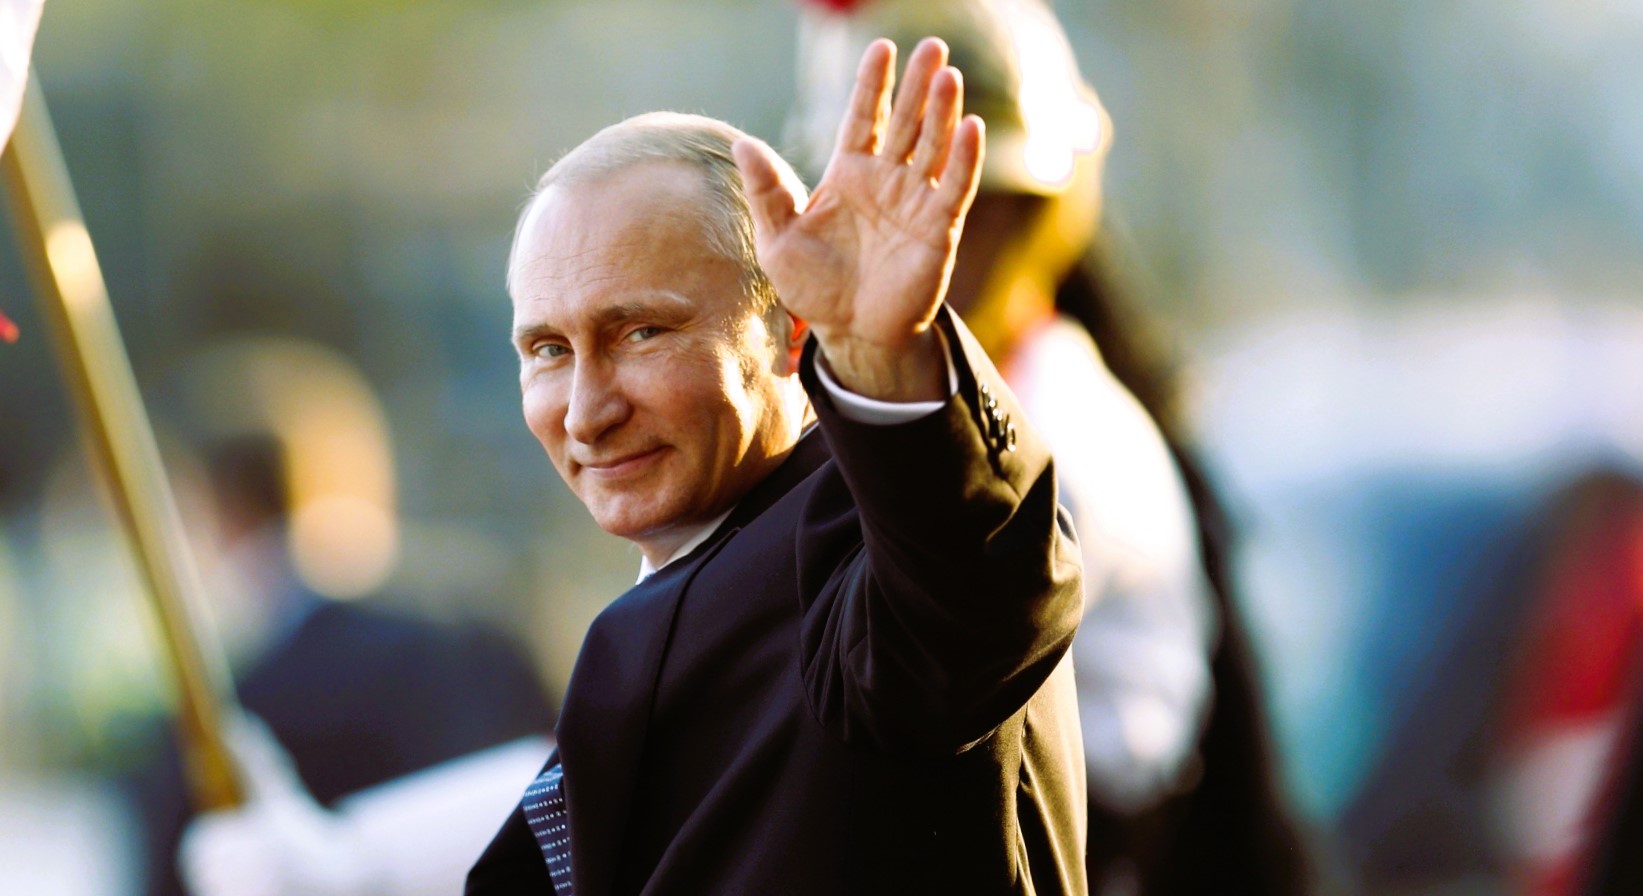 Russian president Vladimir Putin in public.